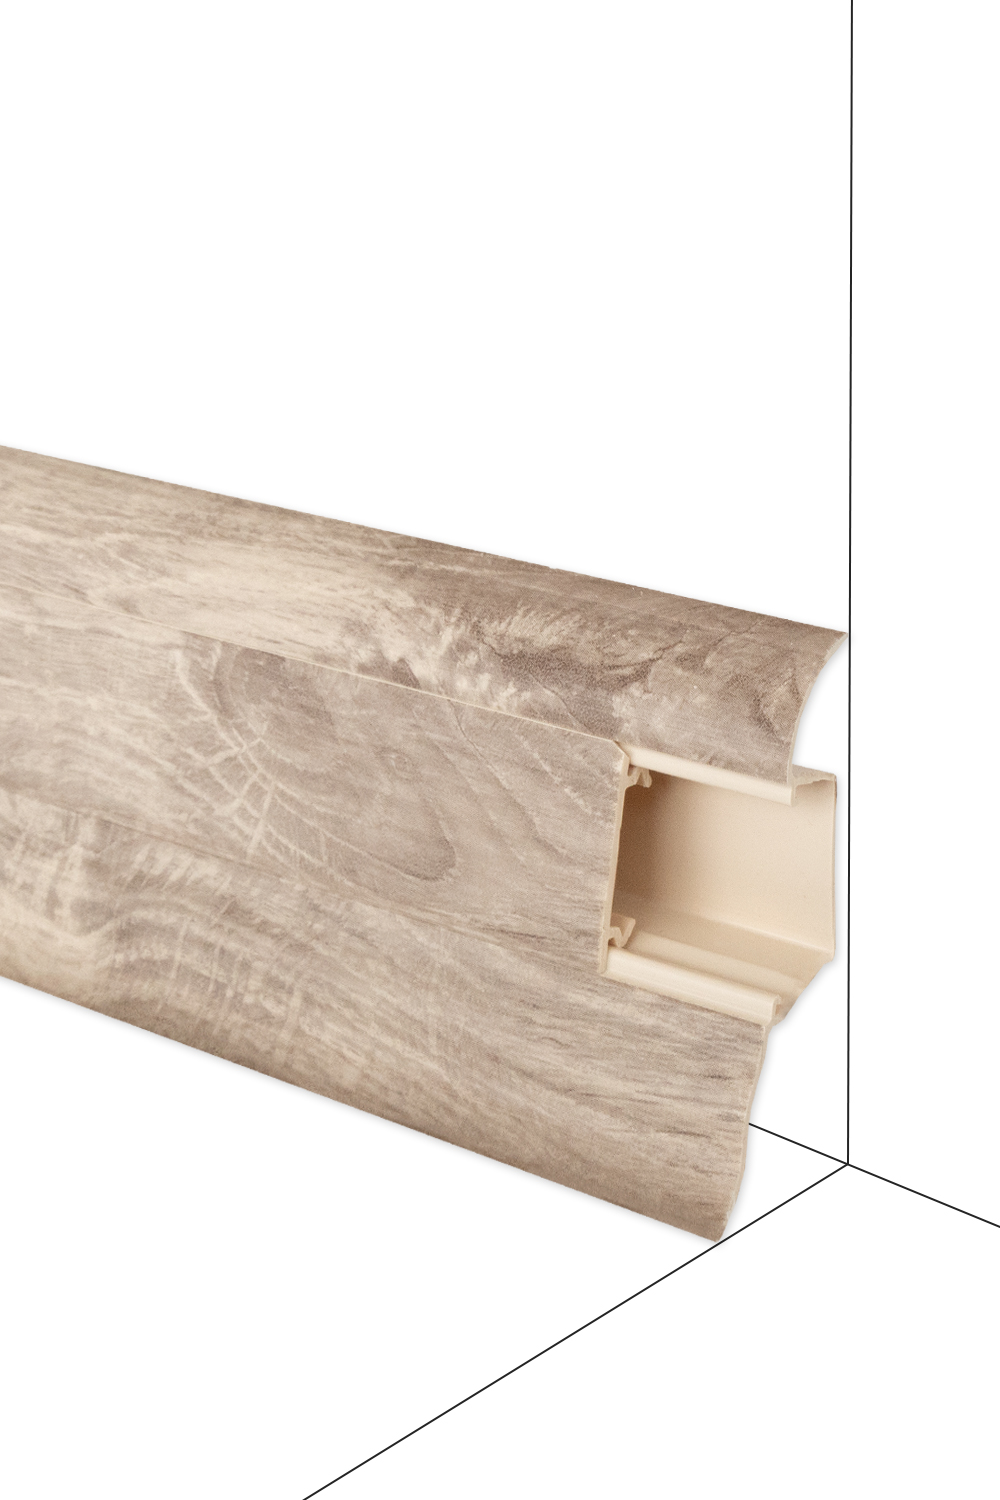 Podlahová lišta DOLLKEN W459 - Dub Superior - dĺžka 250 cm Ukončenie P 